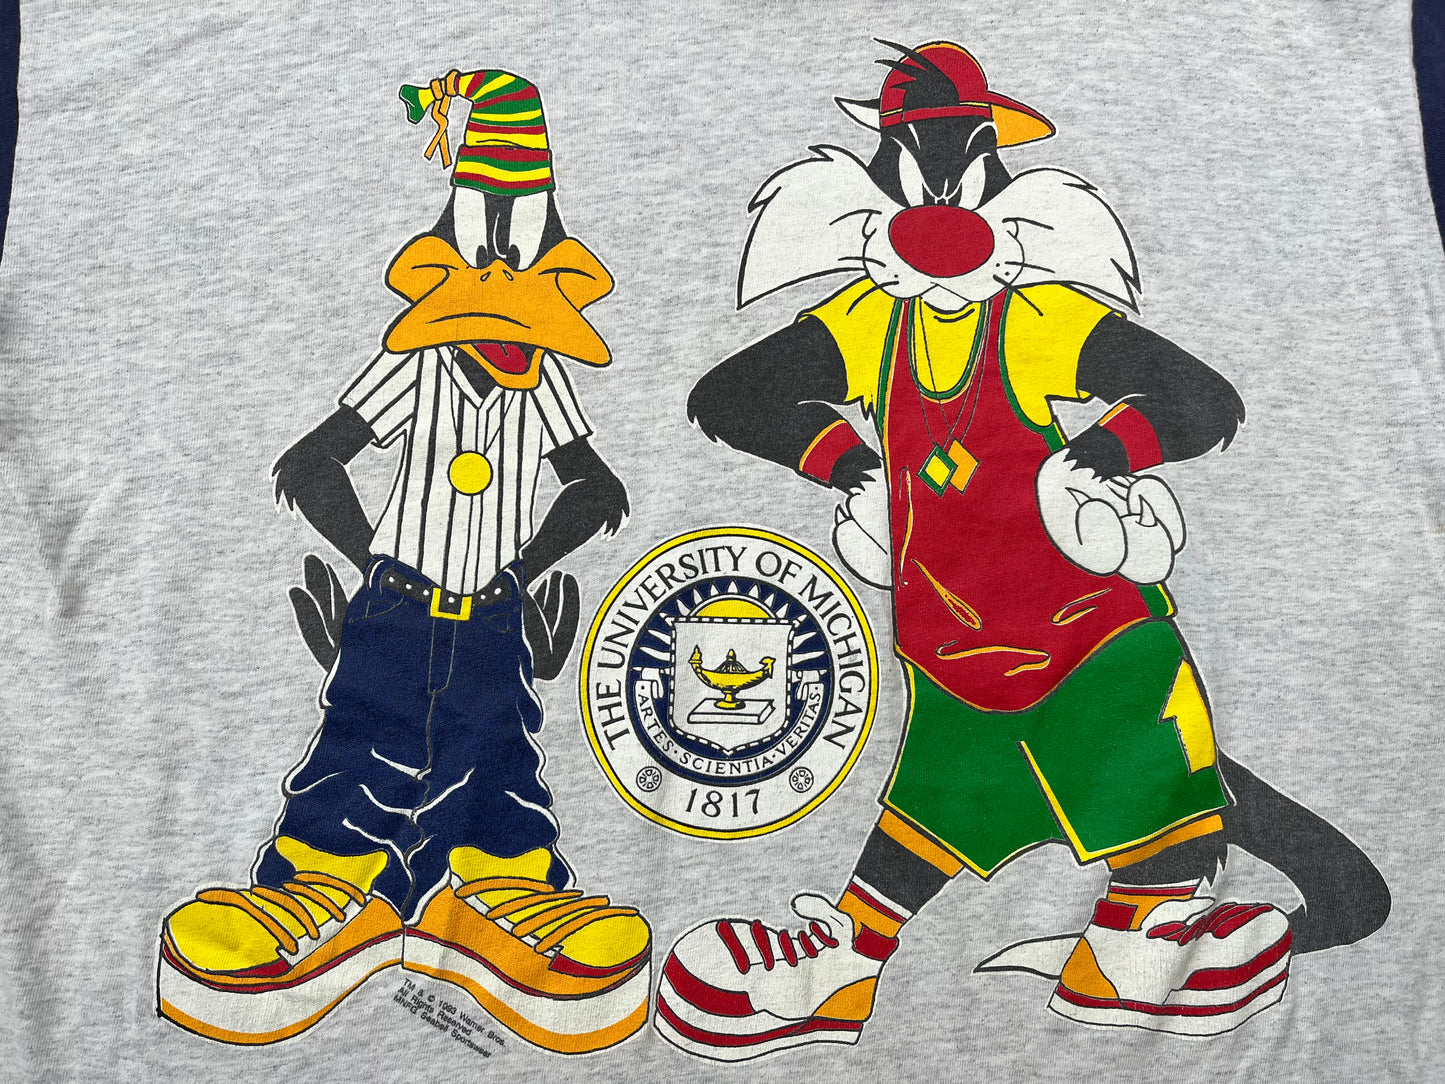 Michigan Looney Tunes Hooded T-Shirt